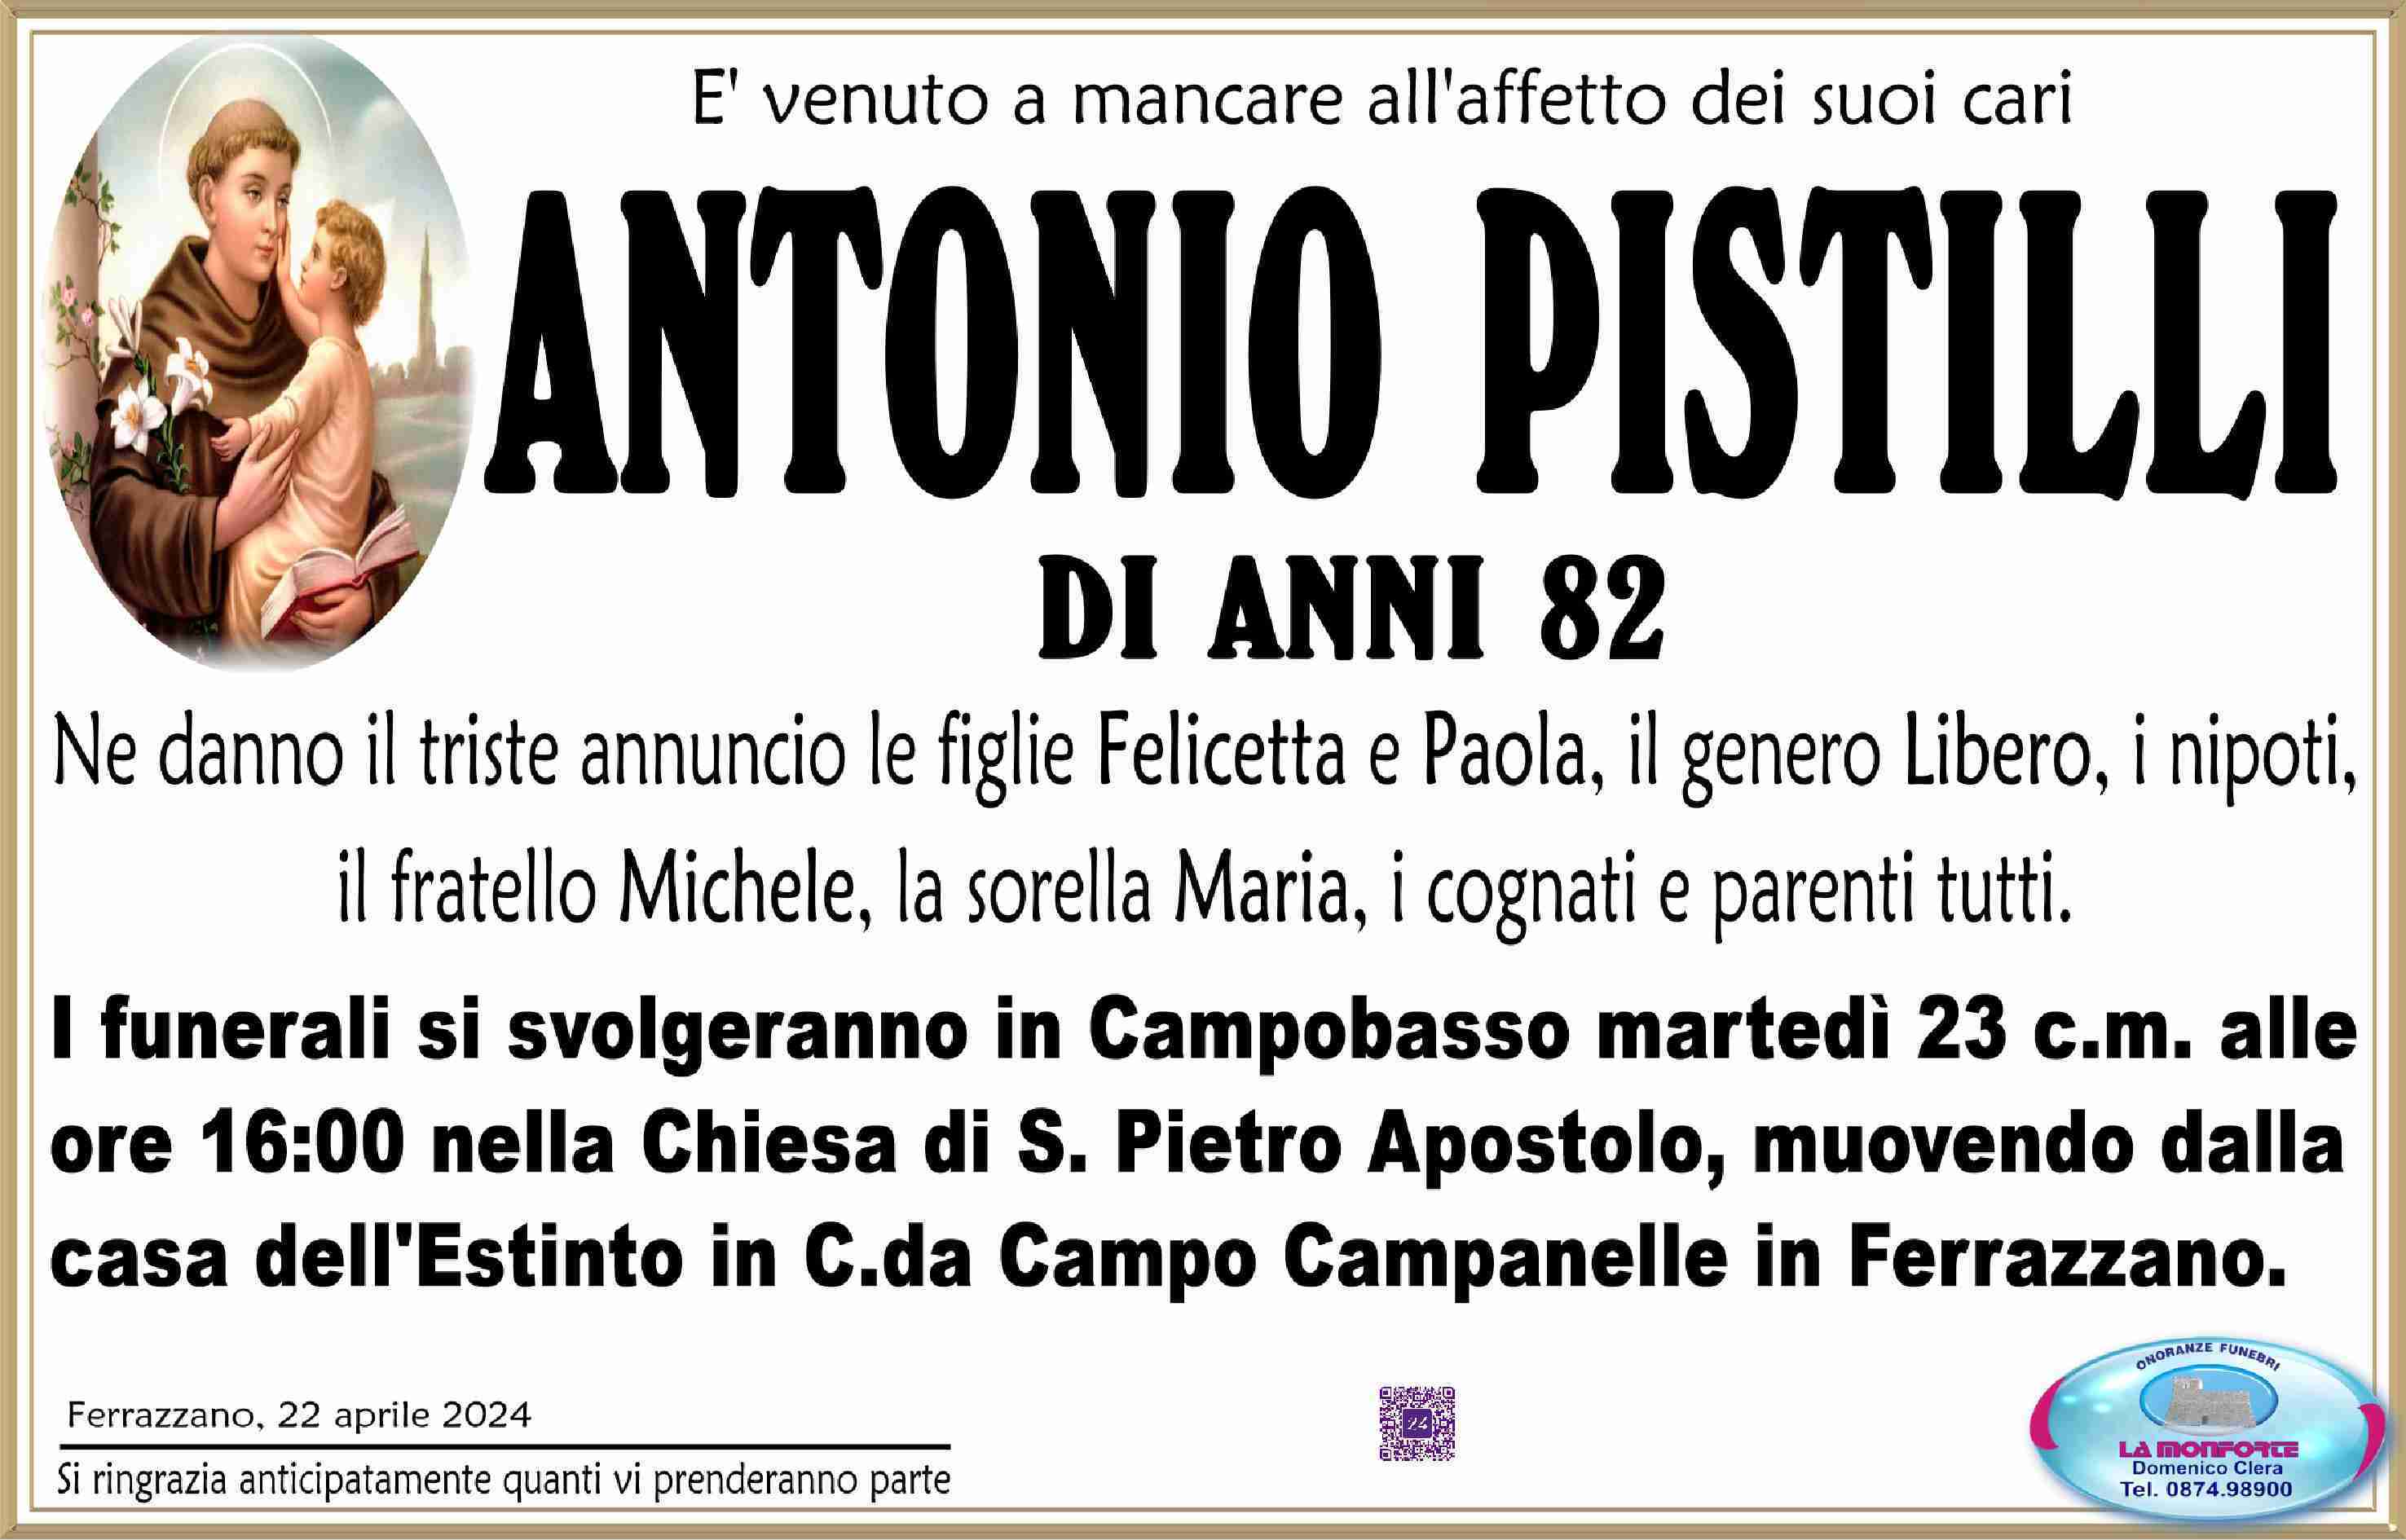 Antonio Pistilli